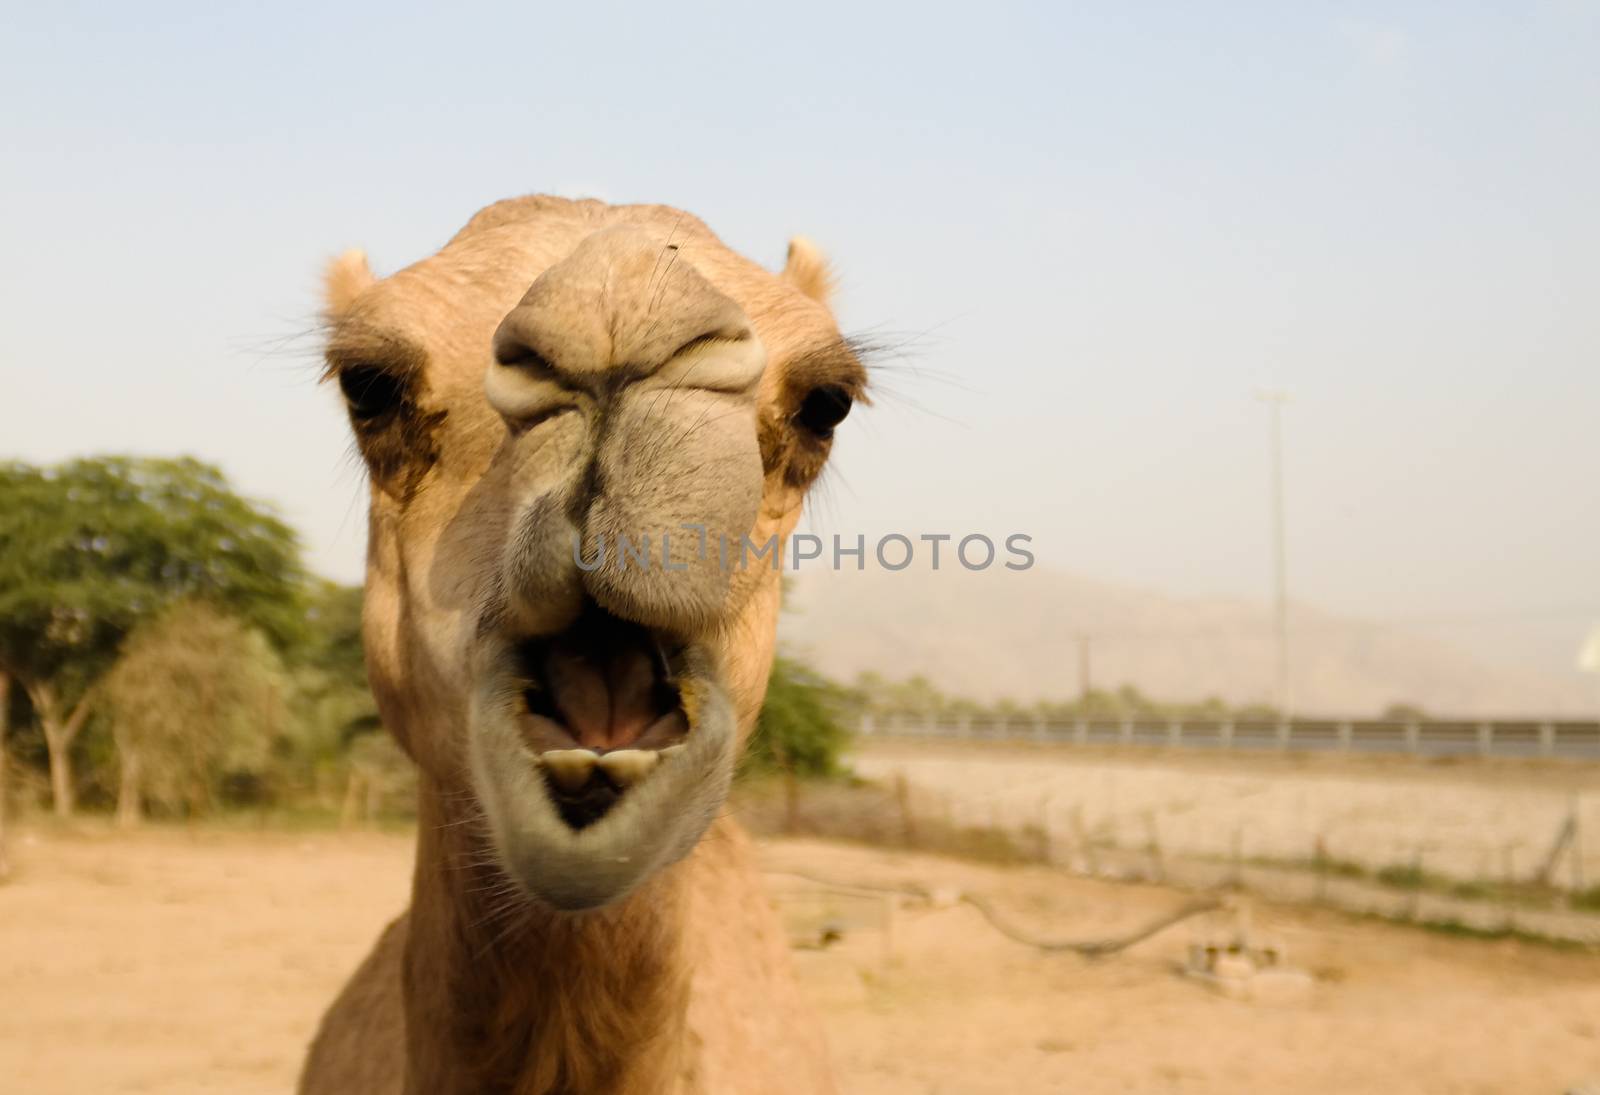 Portrait of funny camel head, Sharjah, UAE by homocosmicos